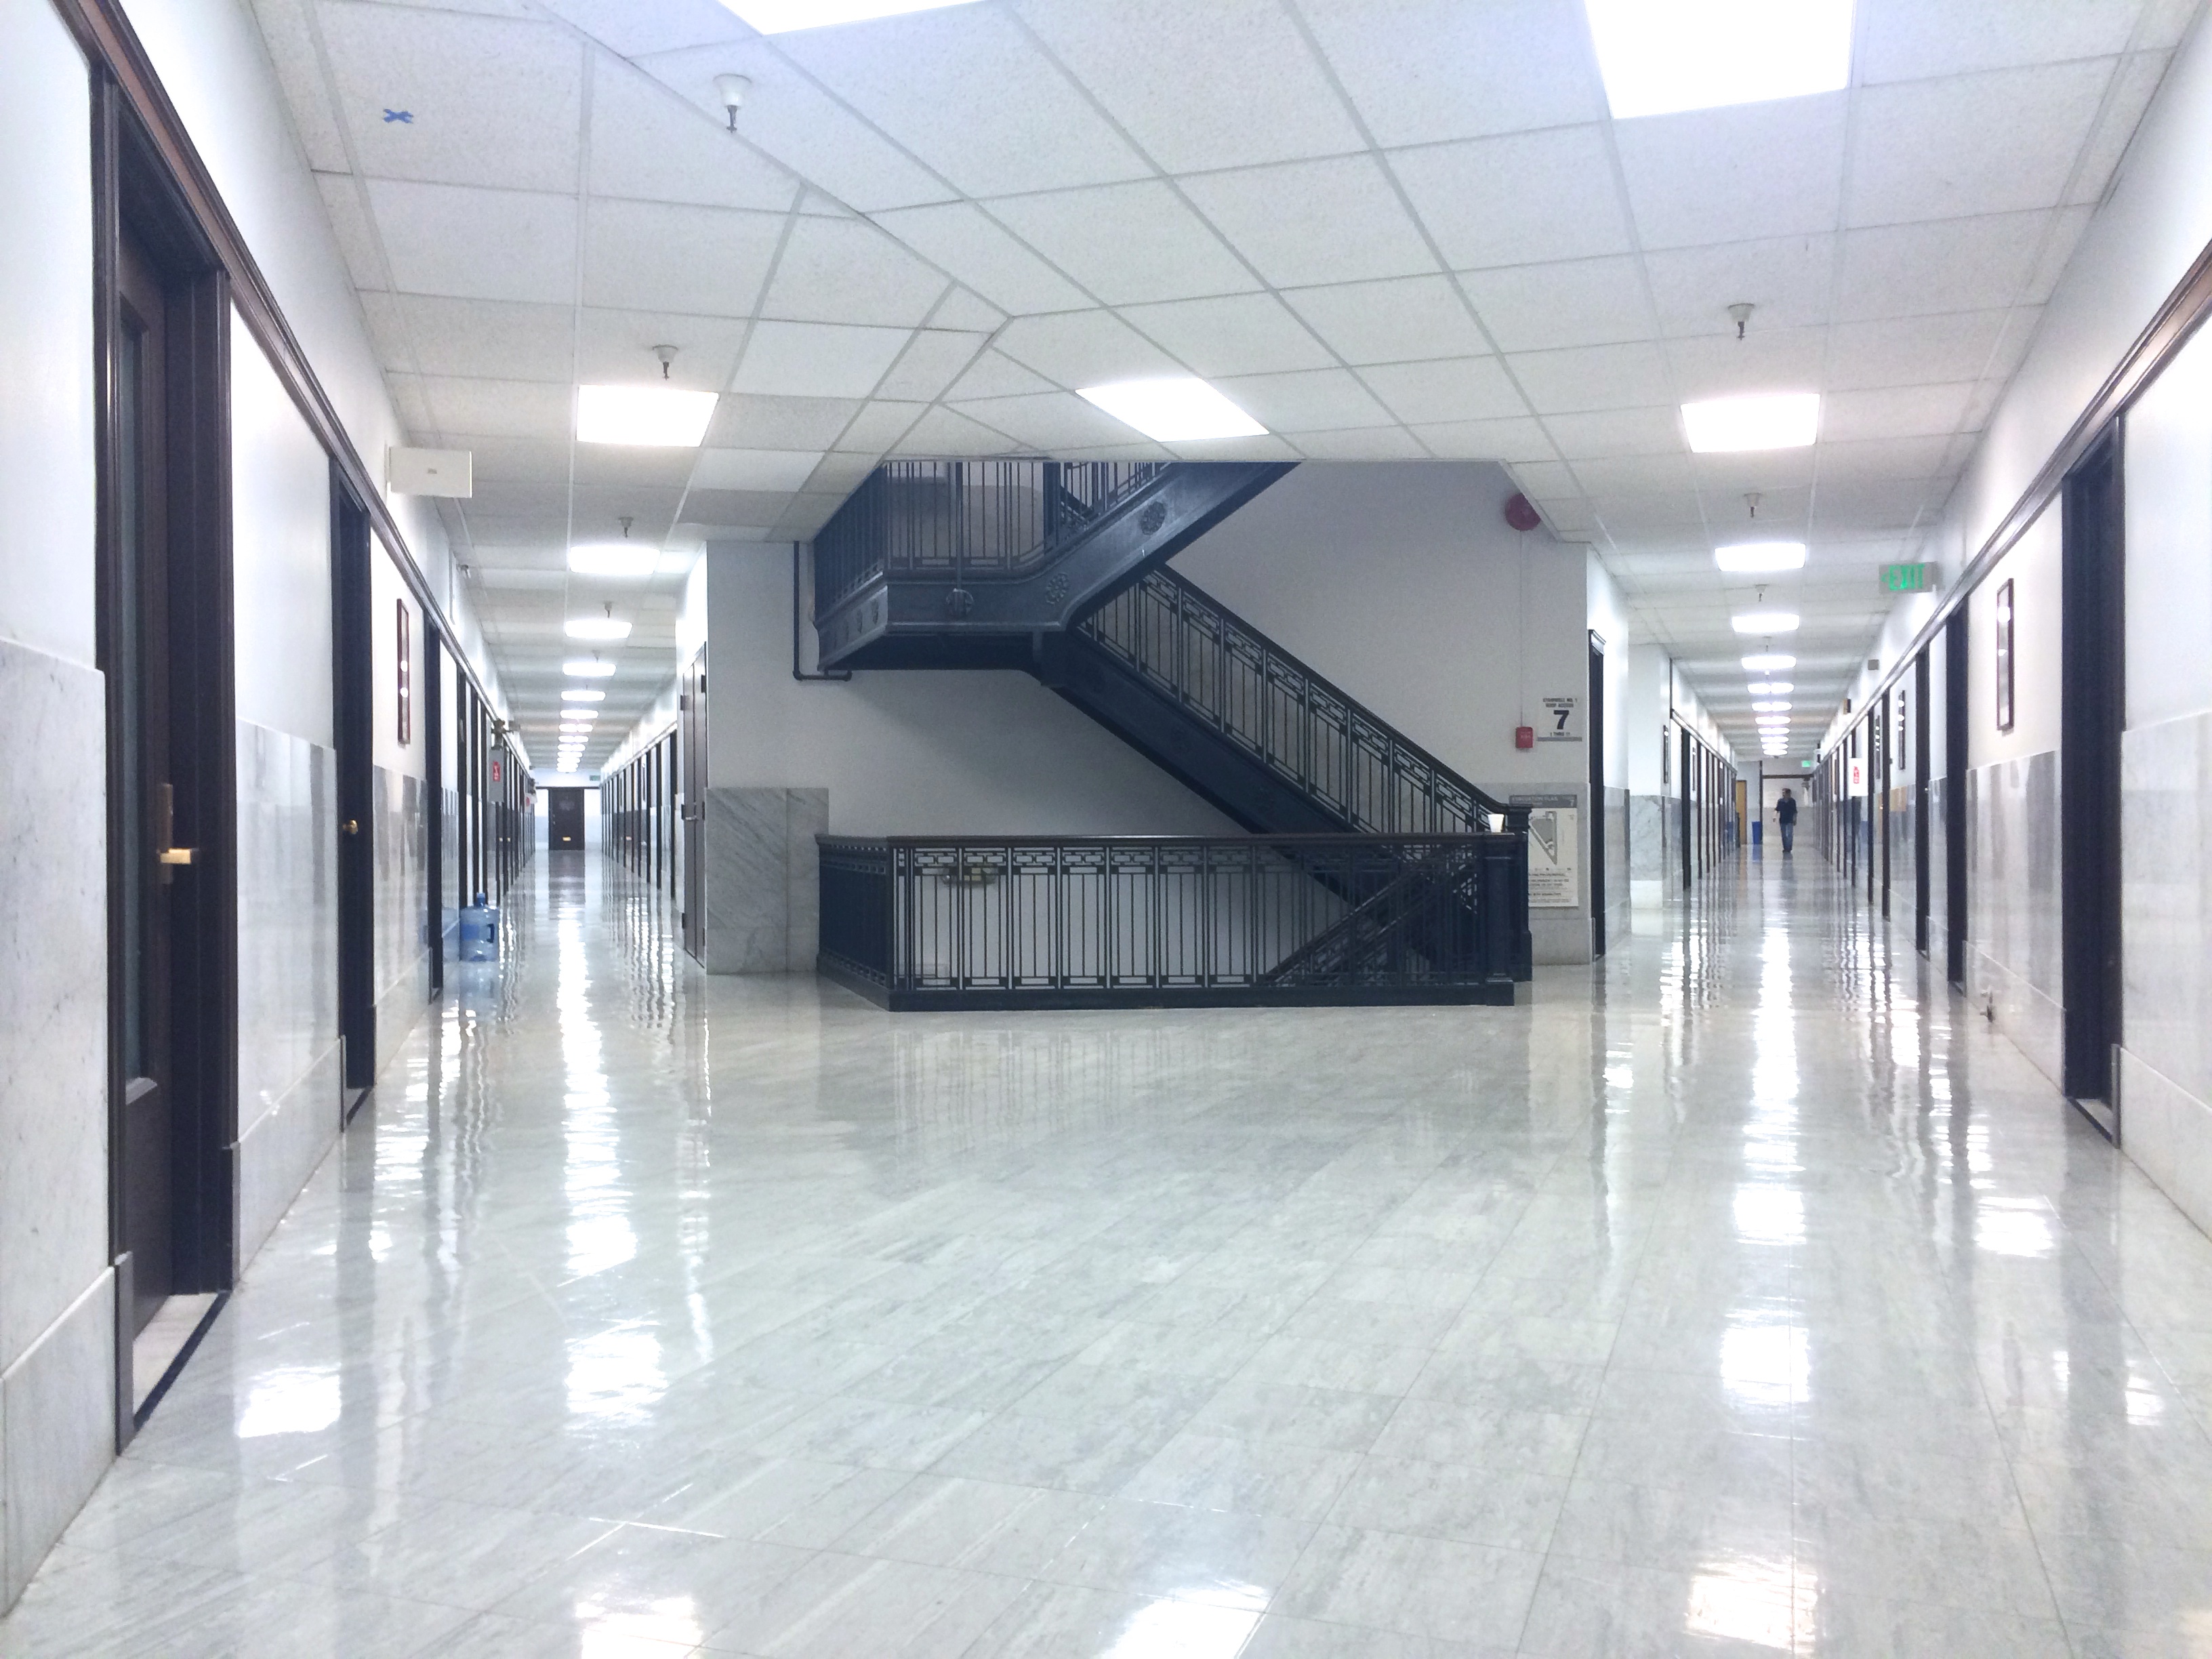 File:Inside Phelan Building, San Francisco.jpg - Wikimedia Commons